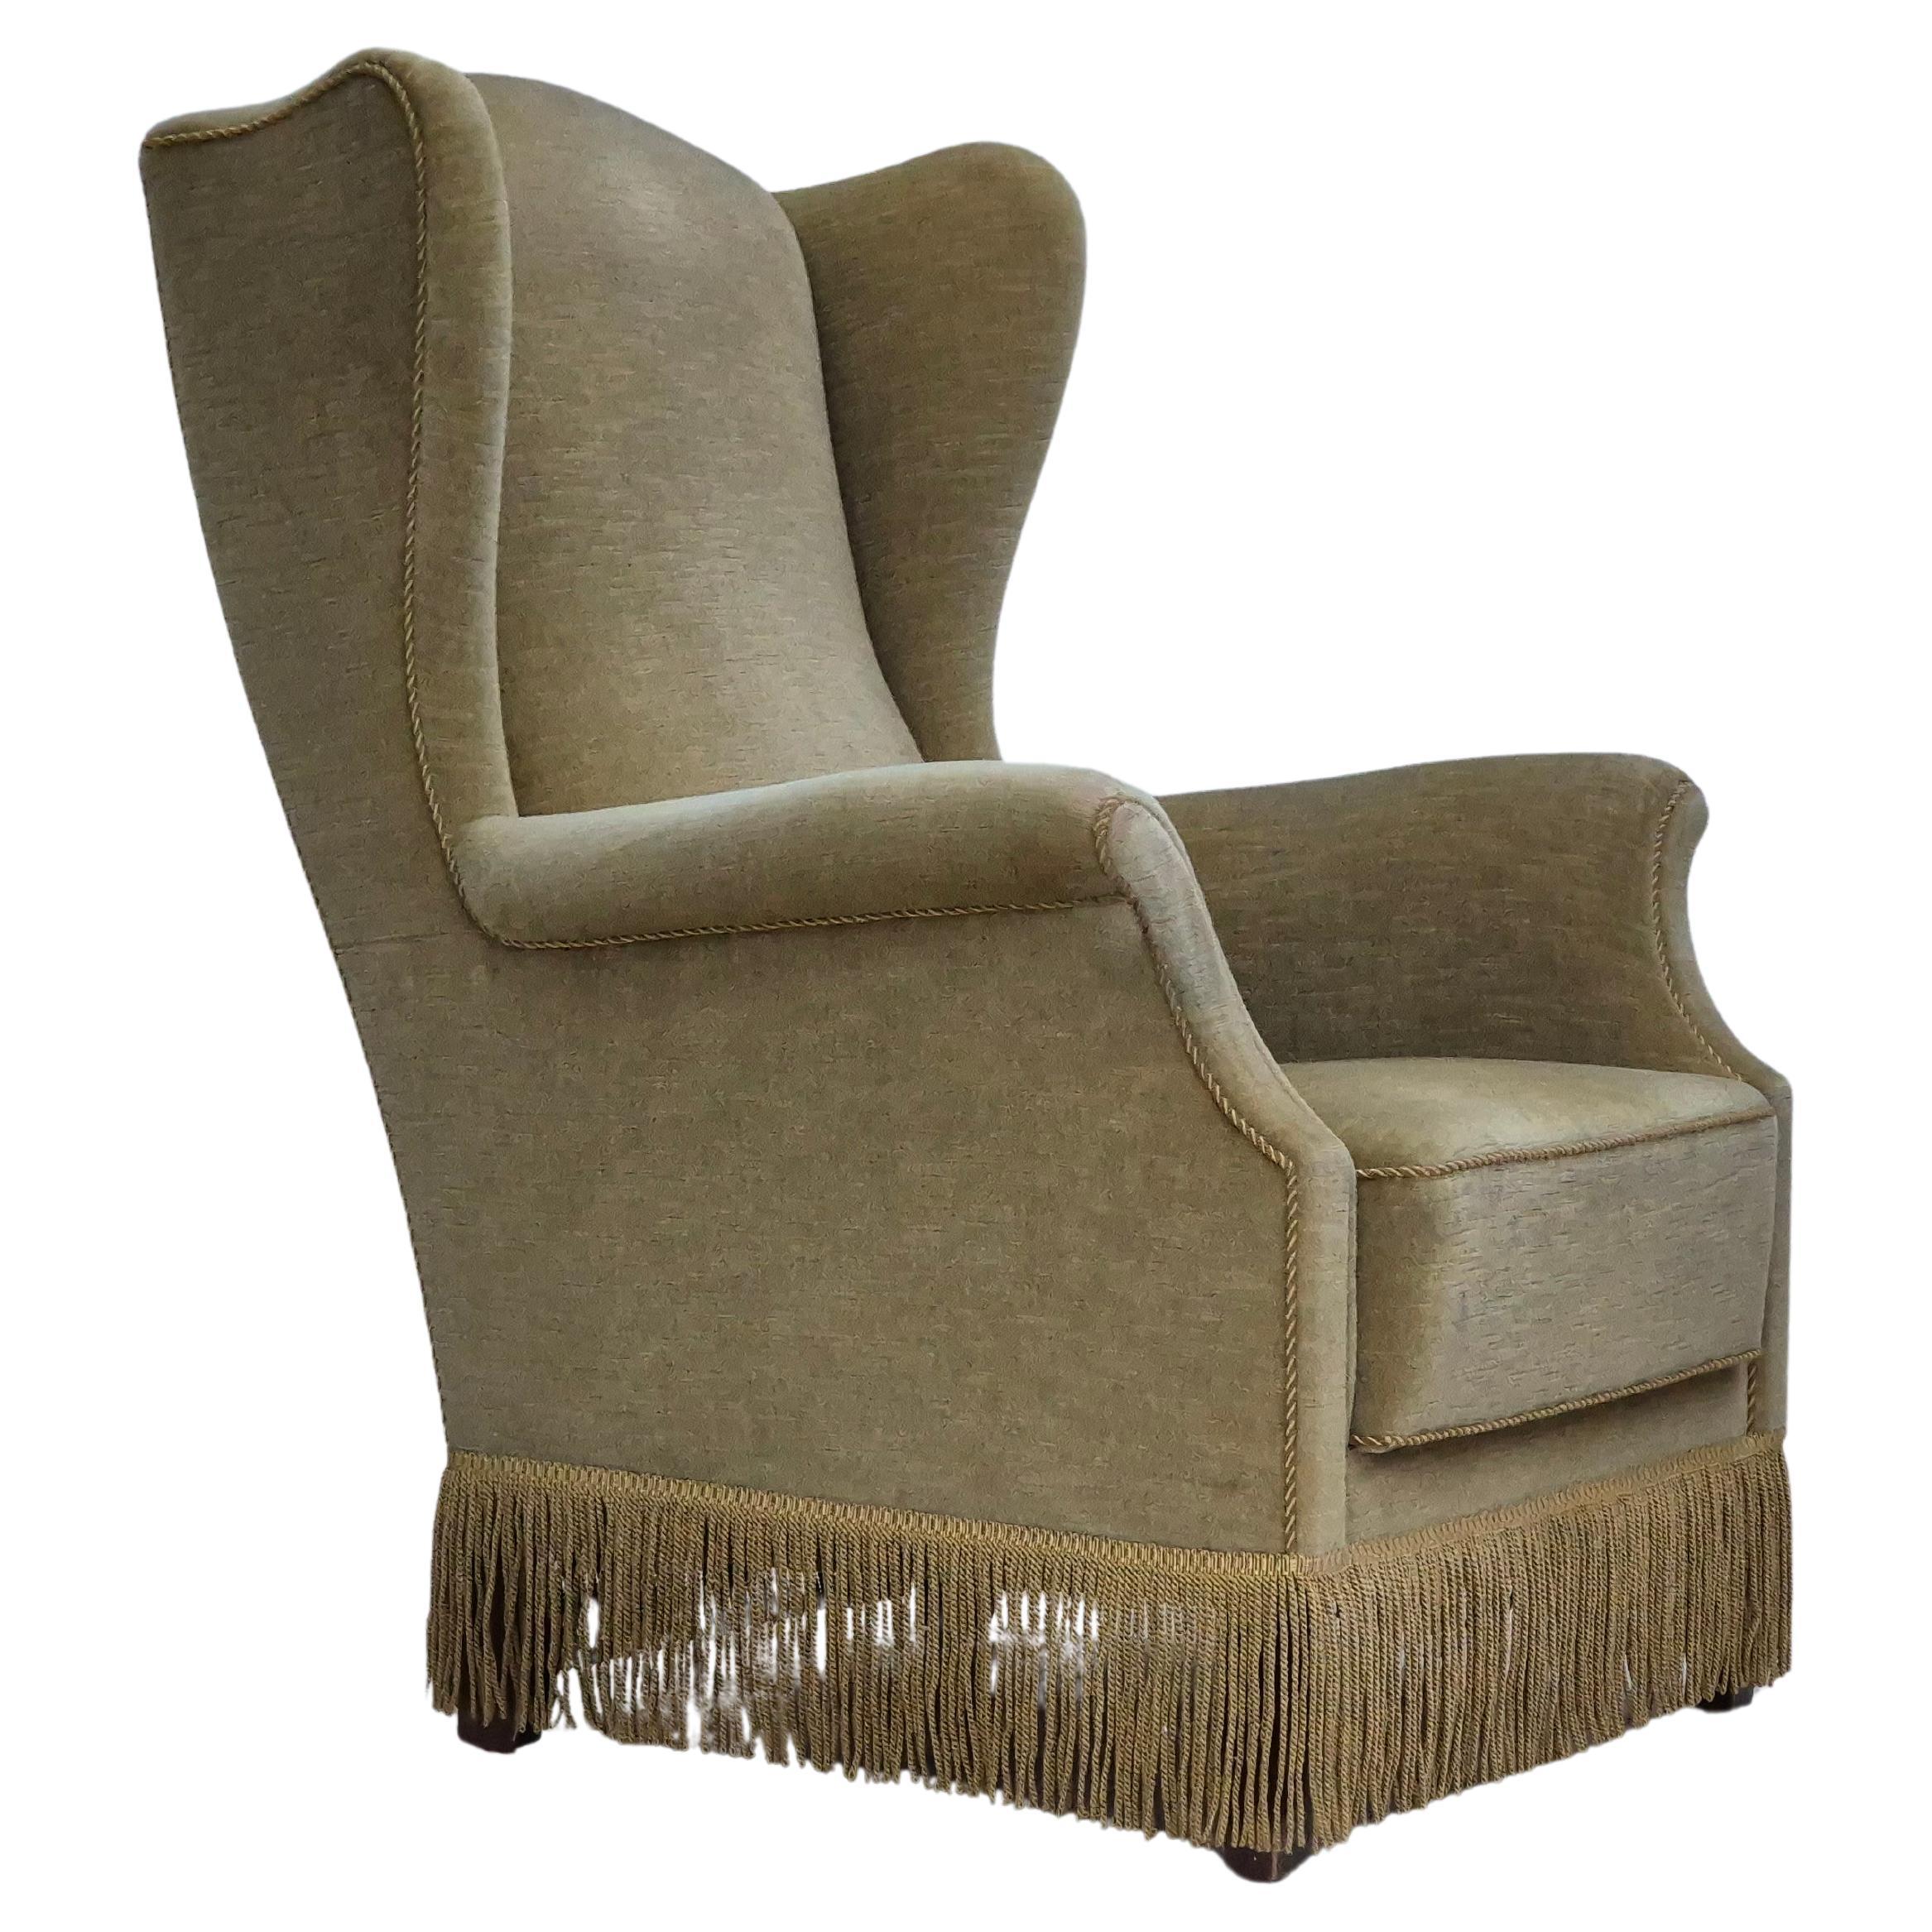 1970s, Danish design, wingback armchair, original condition, furniture velour.